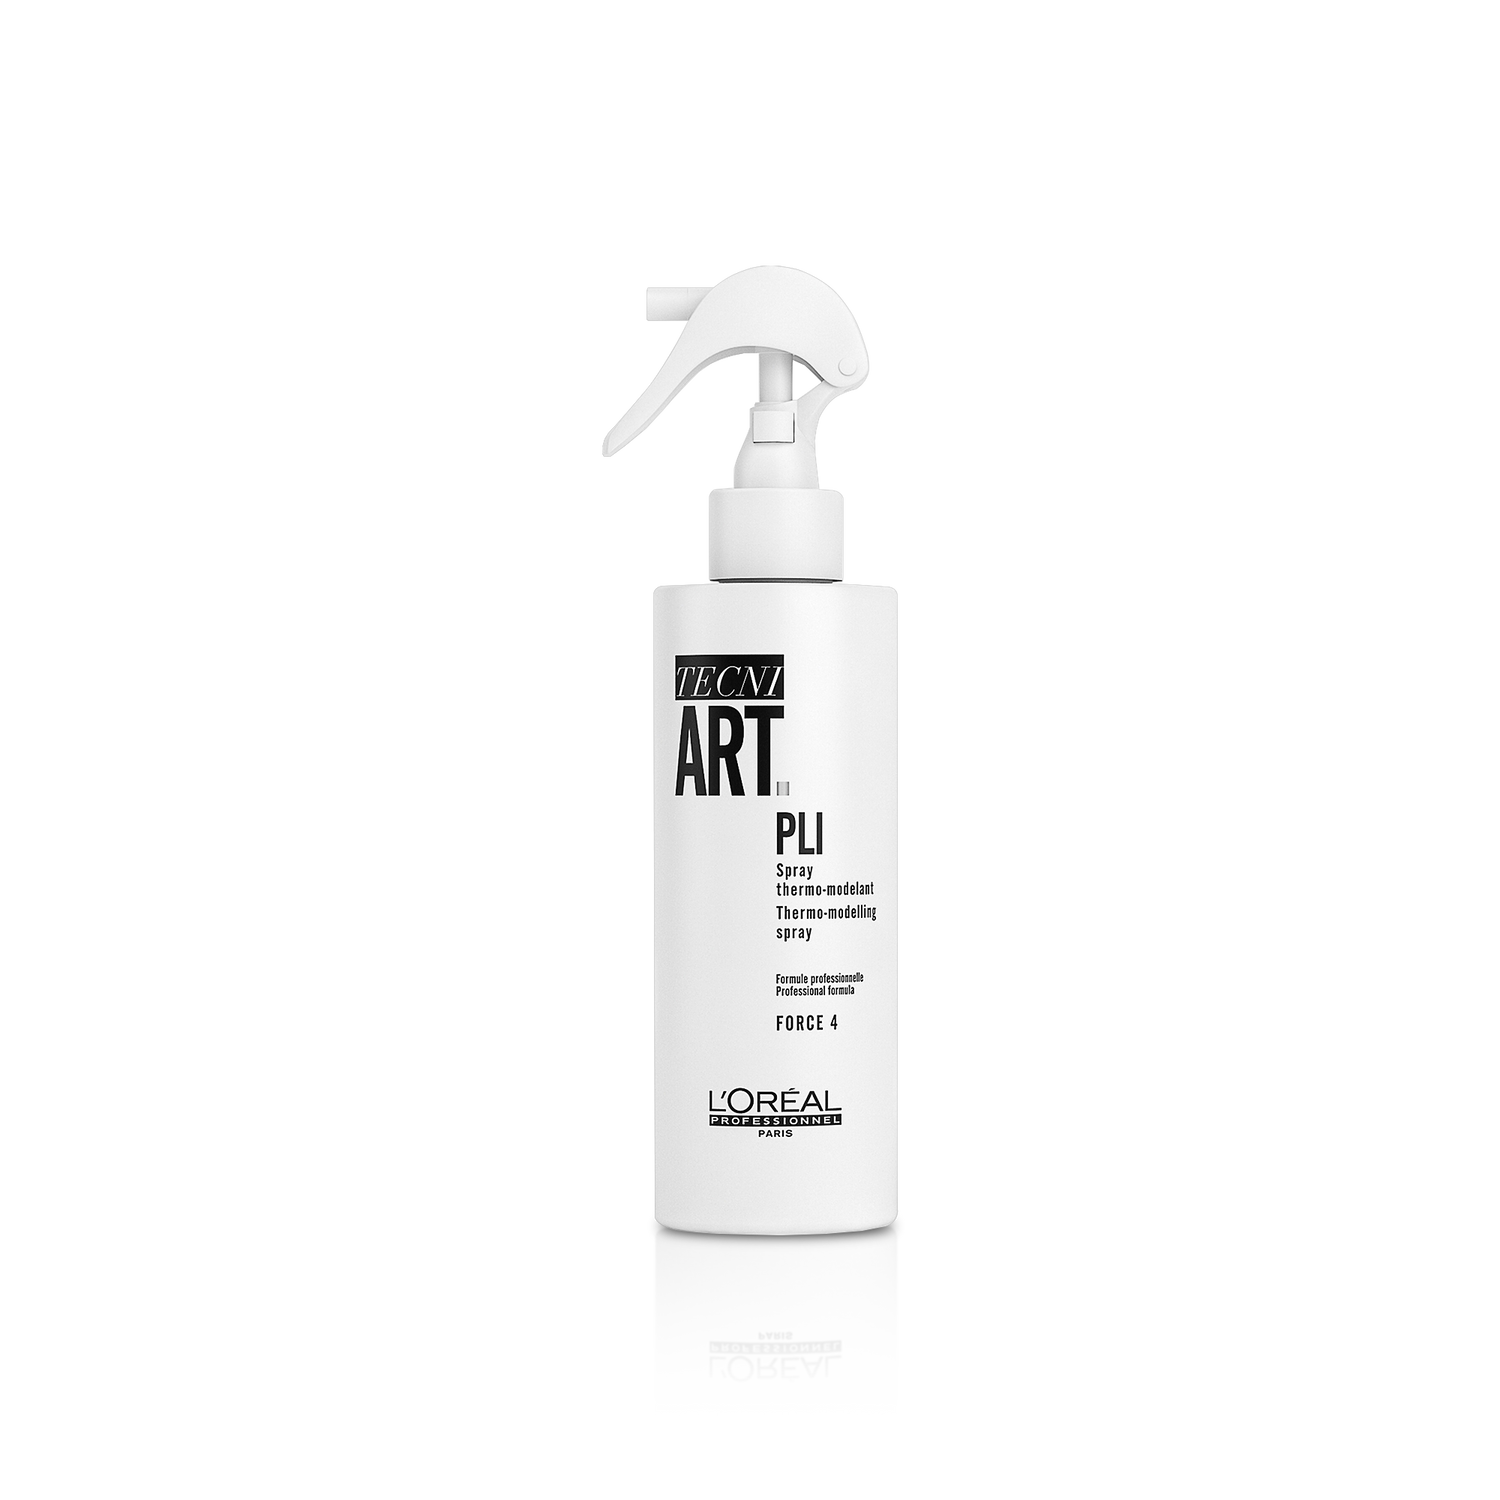 Tecni.Art Pli Thermo-Modeling Spray (Force 4)